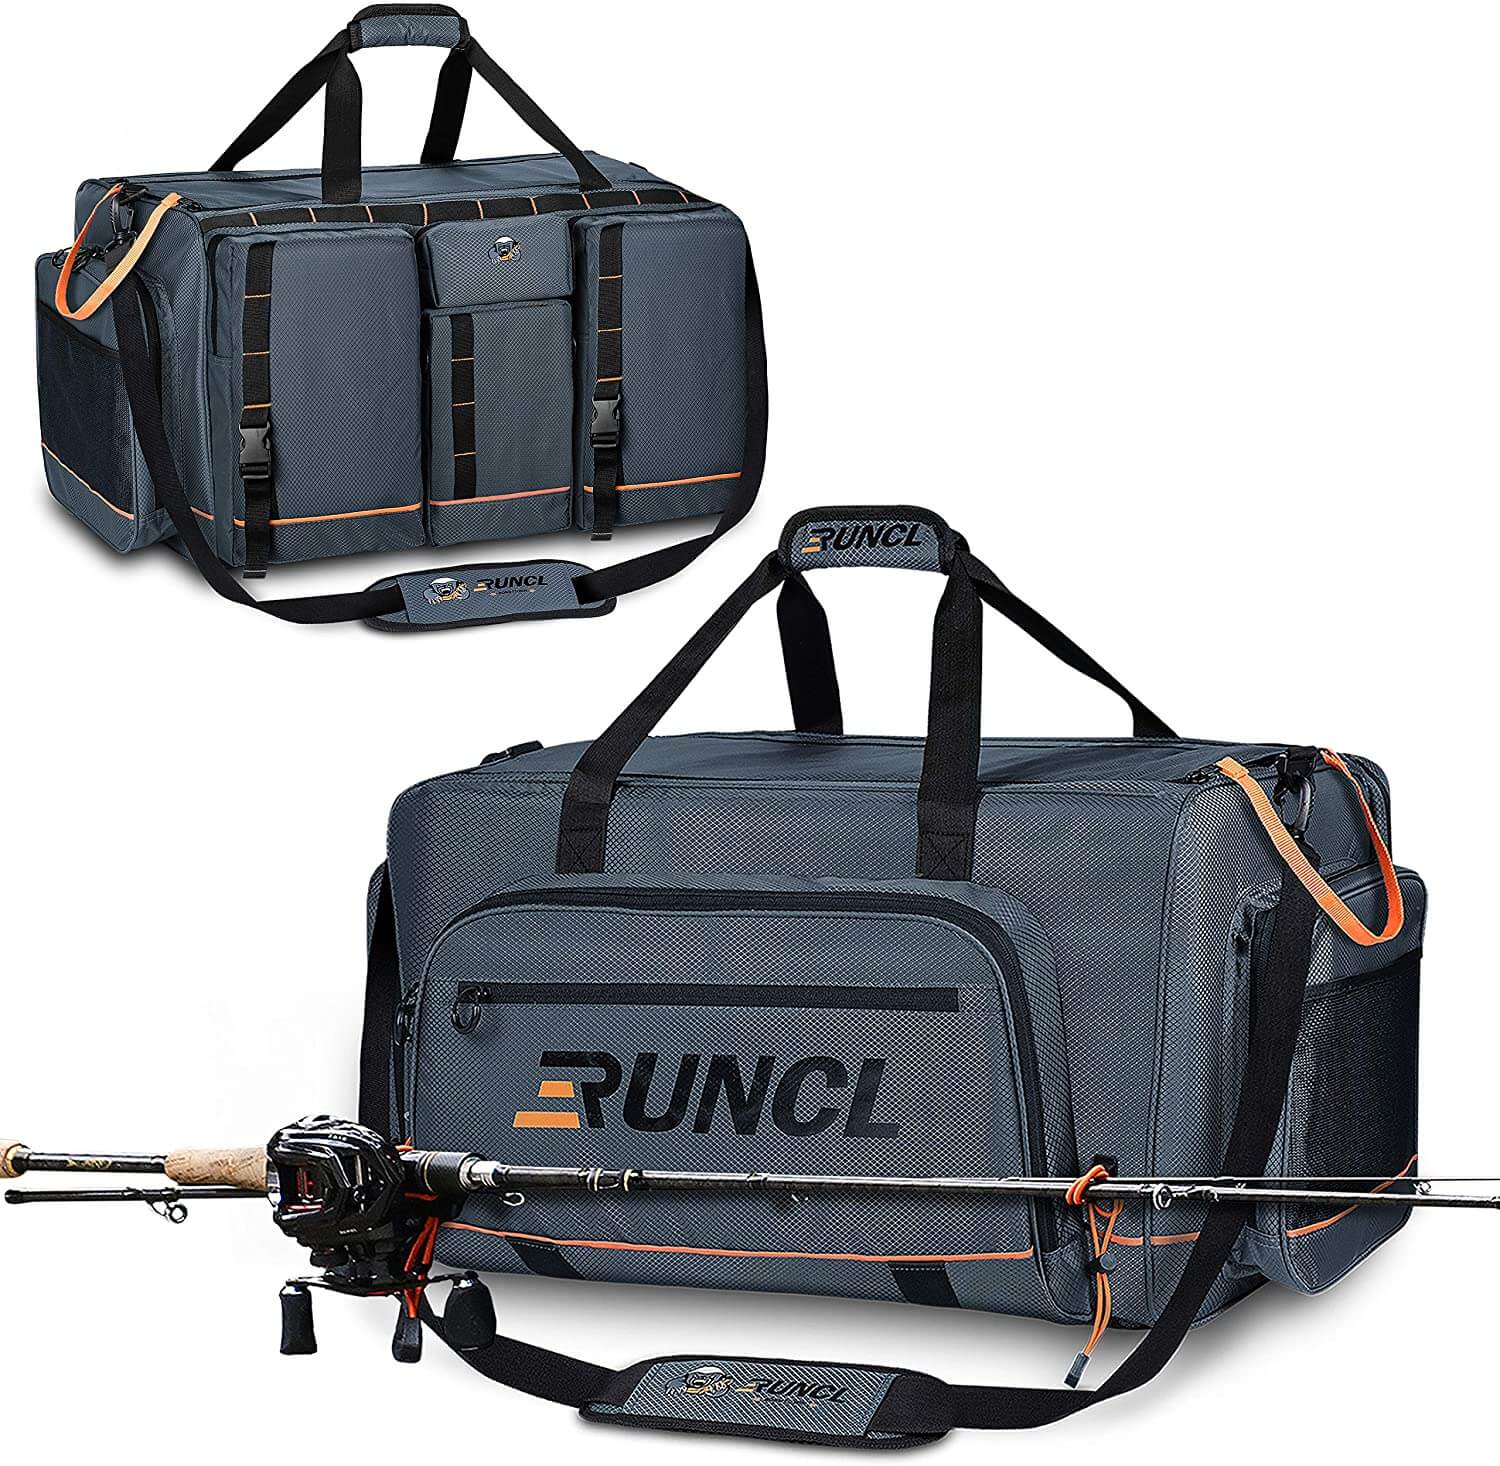 Fishing Tackle Bag – Runcl